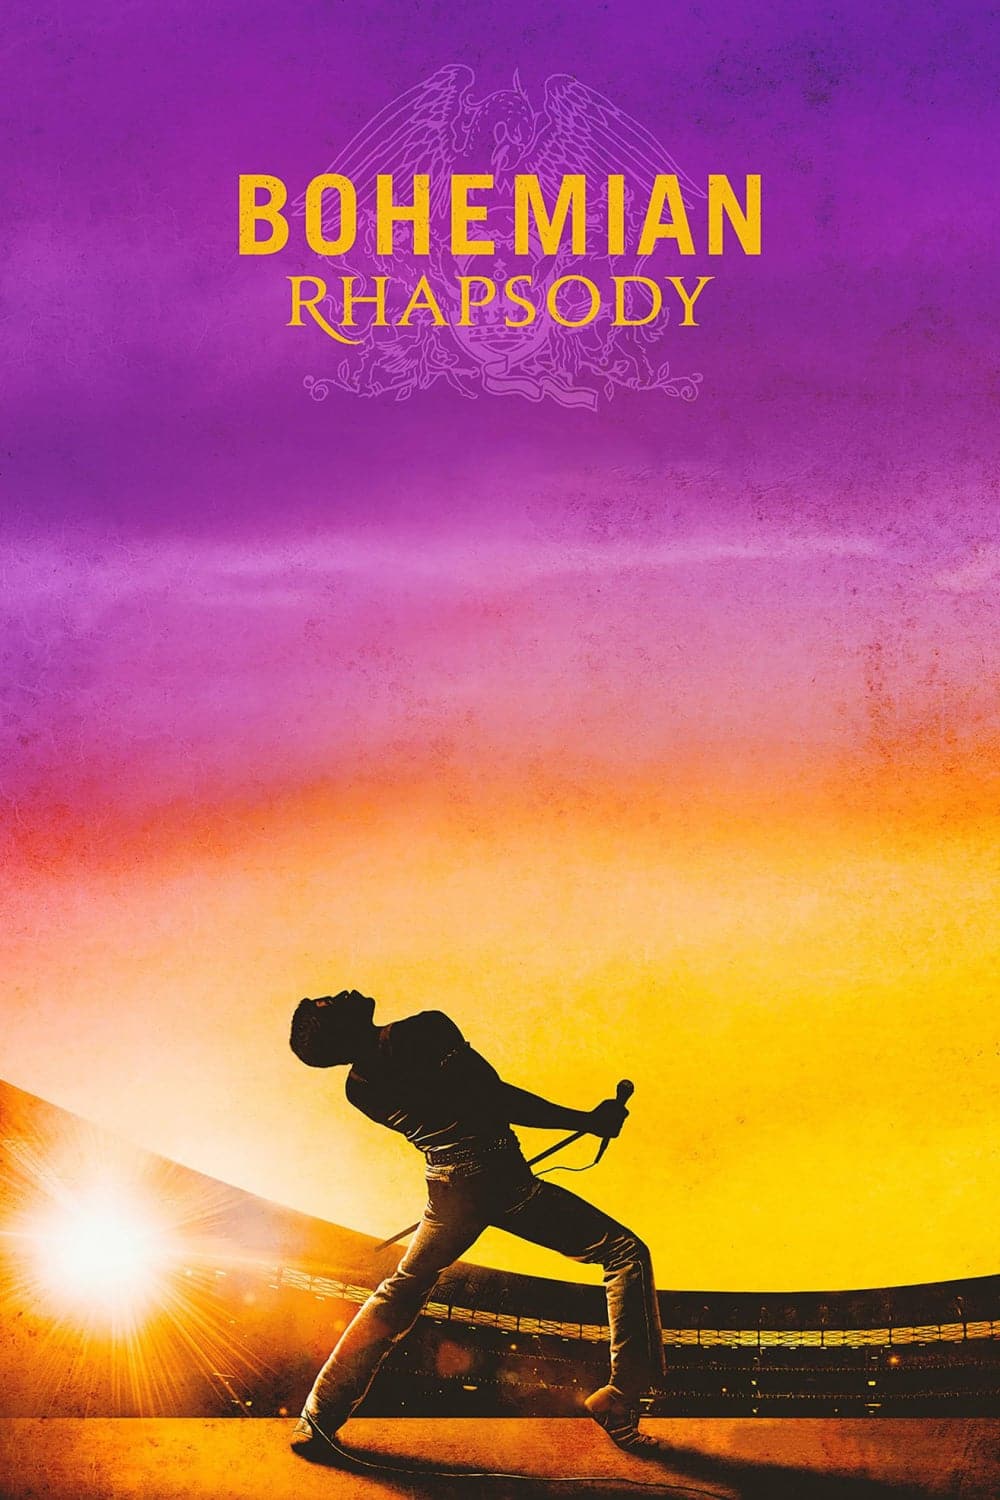 Plakat von "Bohemian Rhapsody"